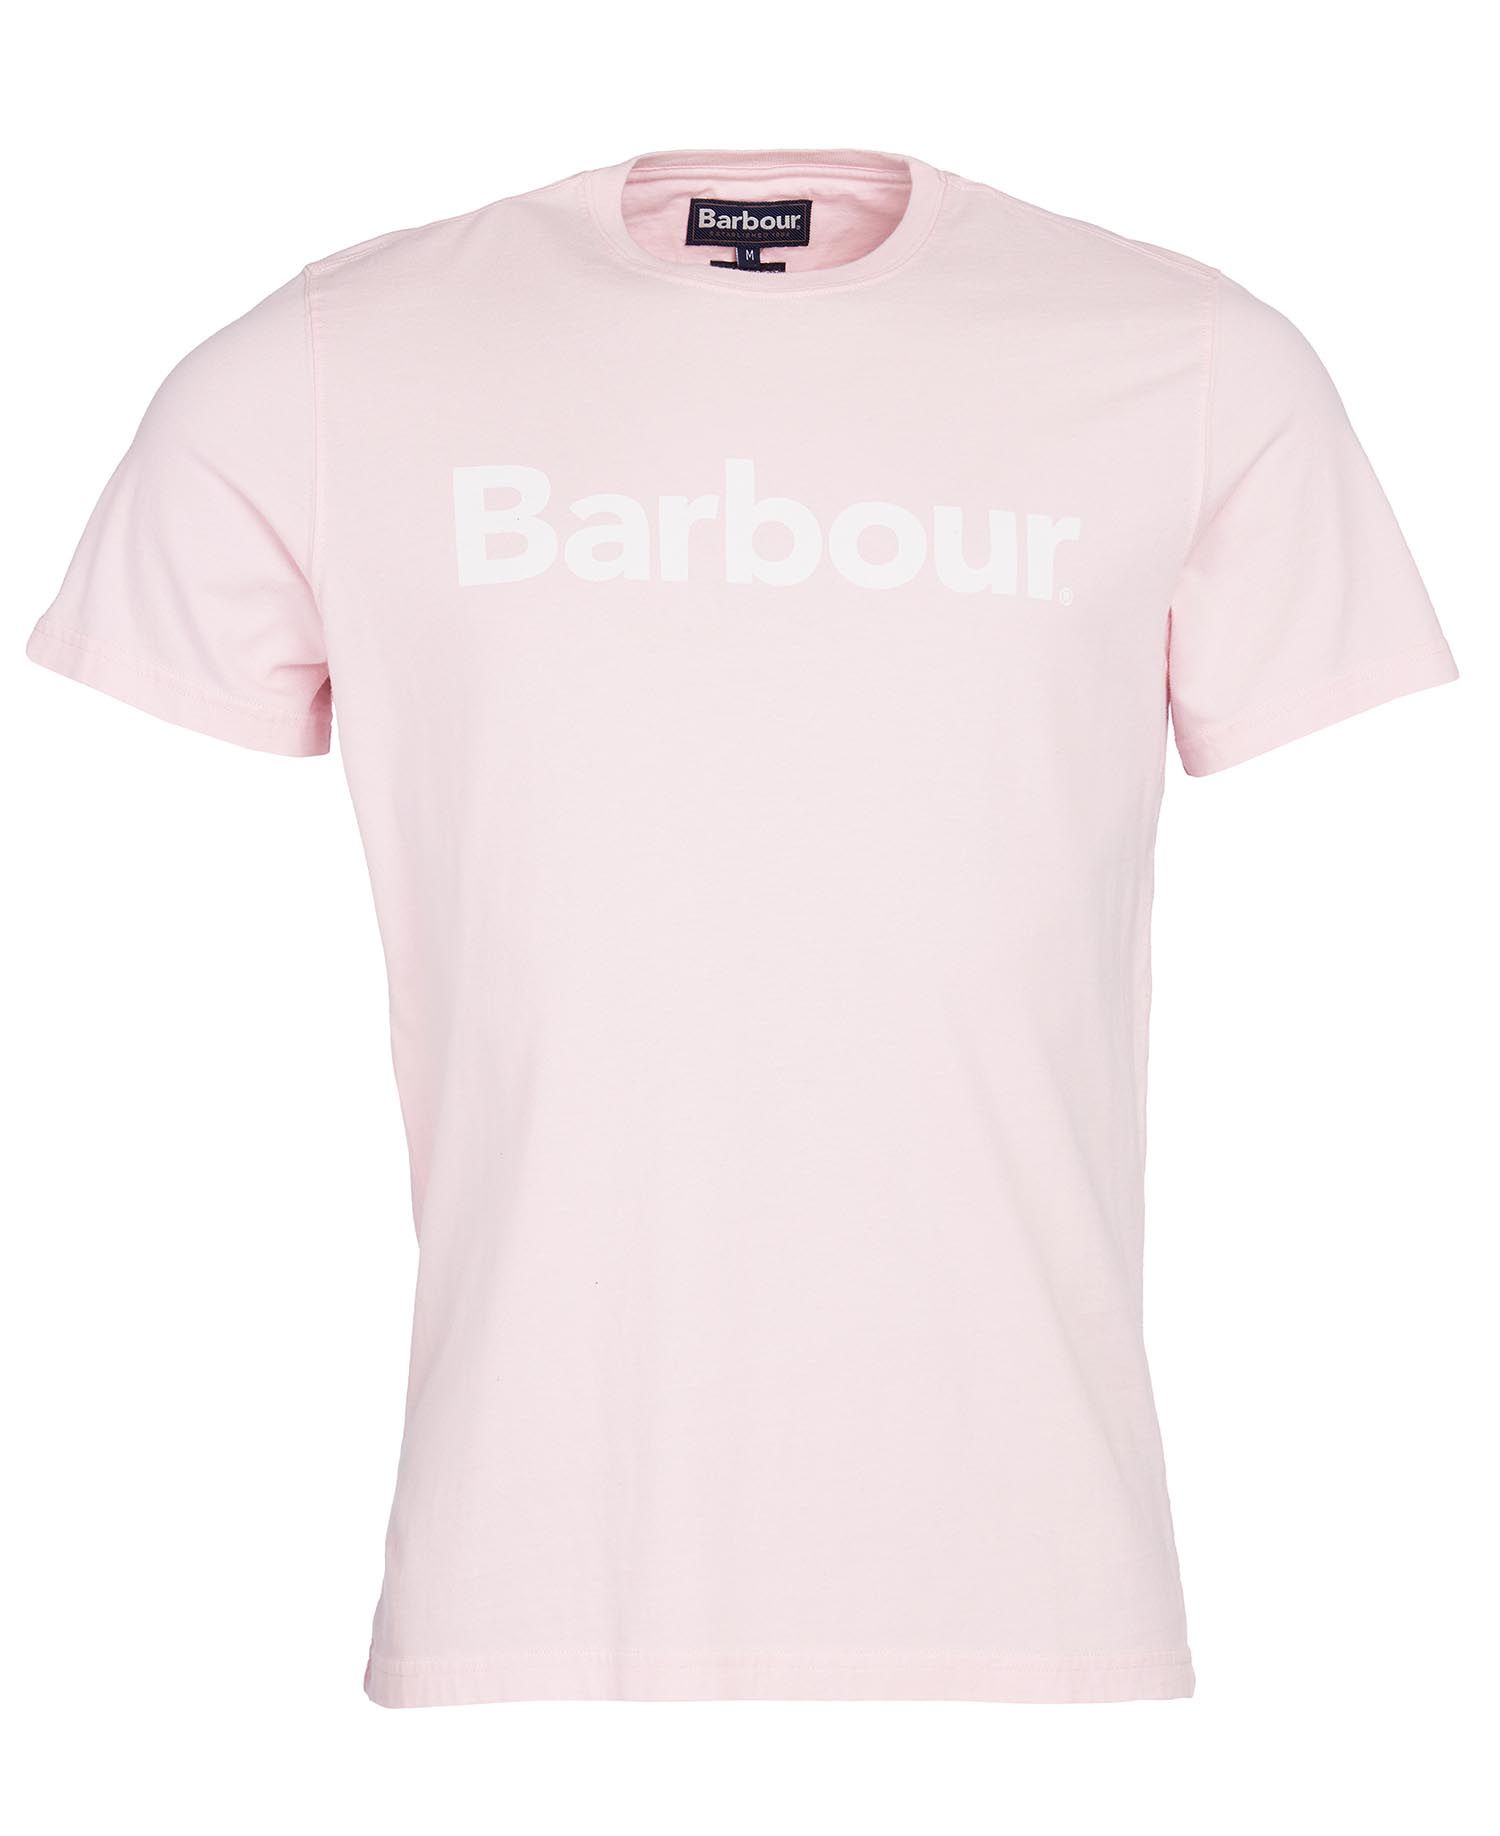 Barbour-Logo-T-Pink.jpg